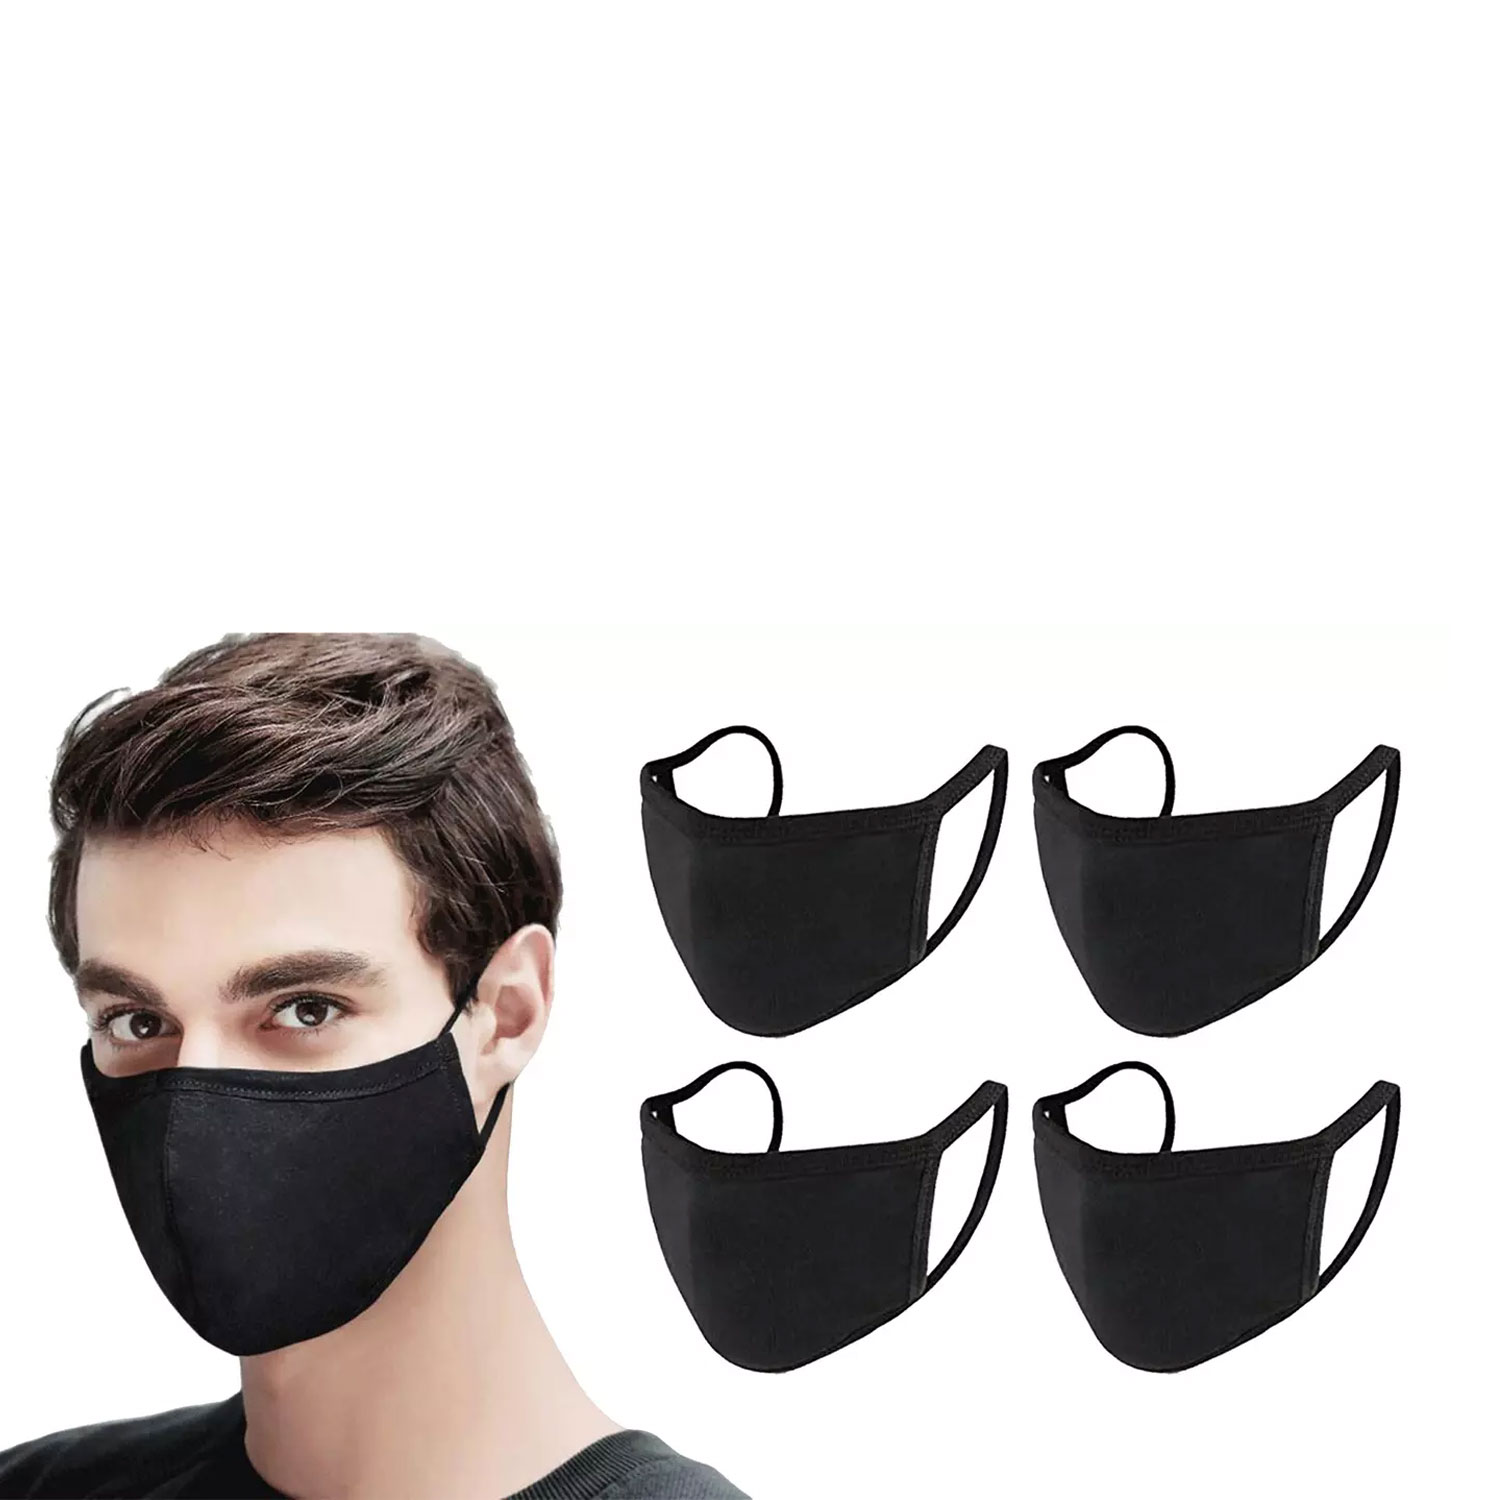 Reusable Face Masks - Non-Medical 12 Pack